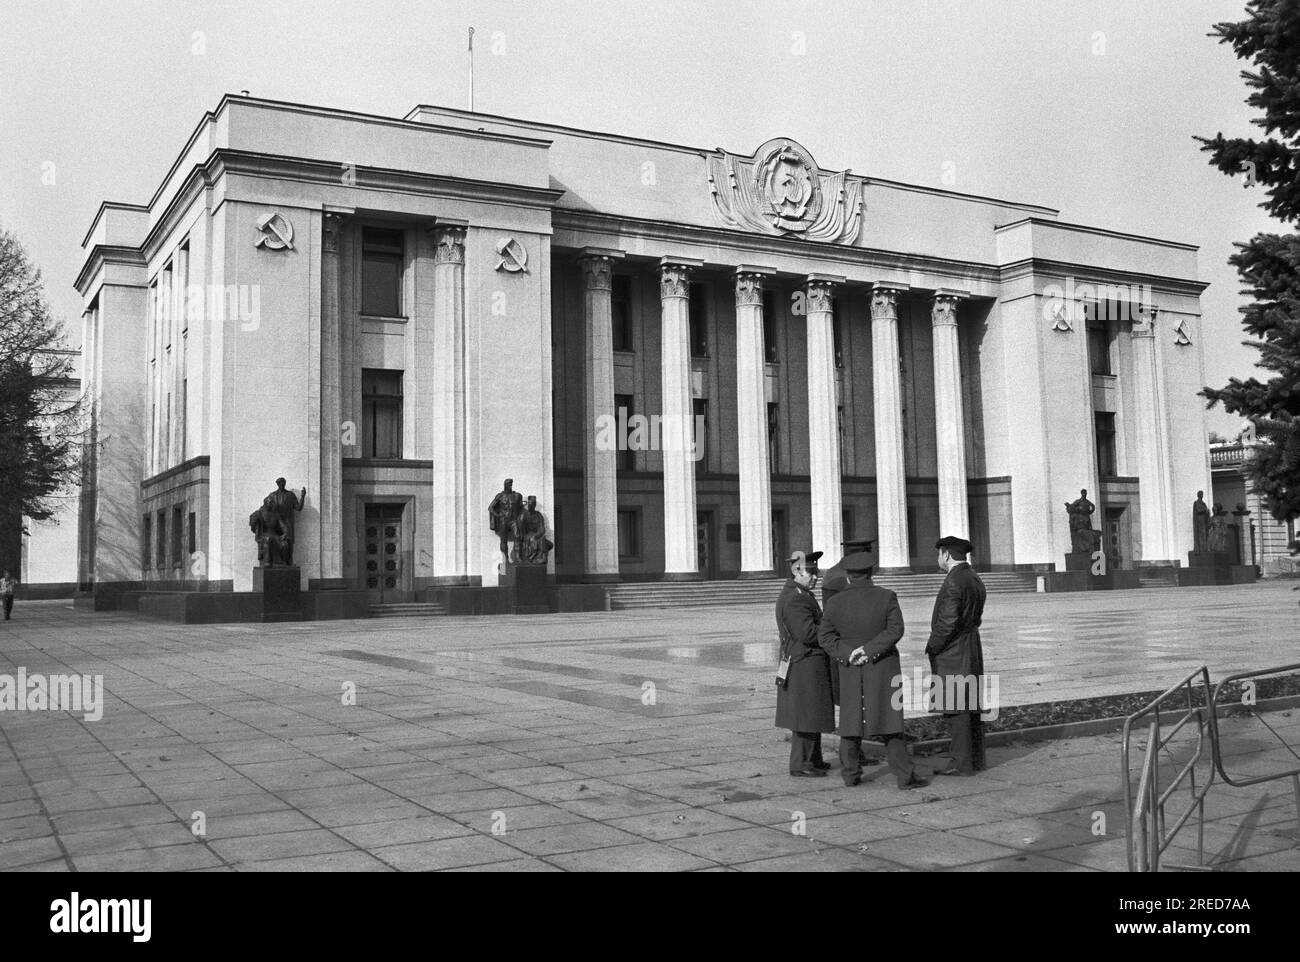 Ukraine,Kiev, 23.10.1992 Archiv.: 37-19-20 City photos Kiev Photo: the Parliament [automated translation] Stock Photo